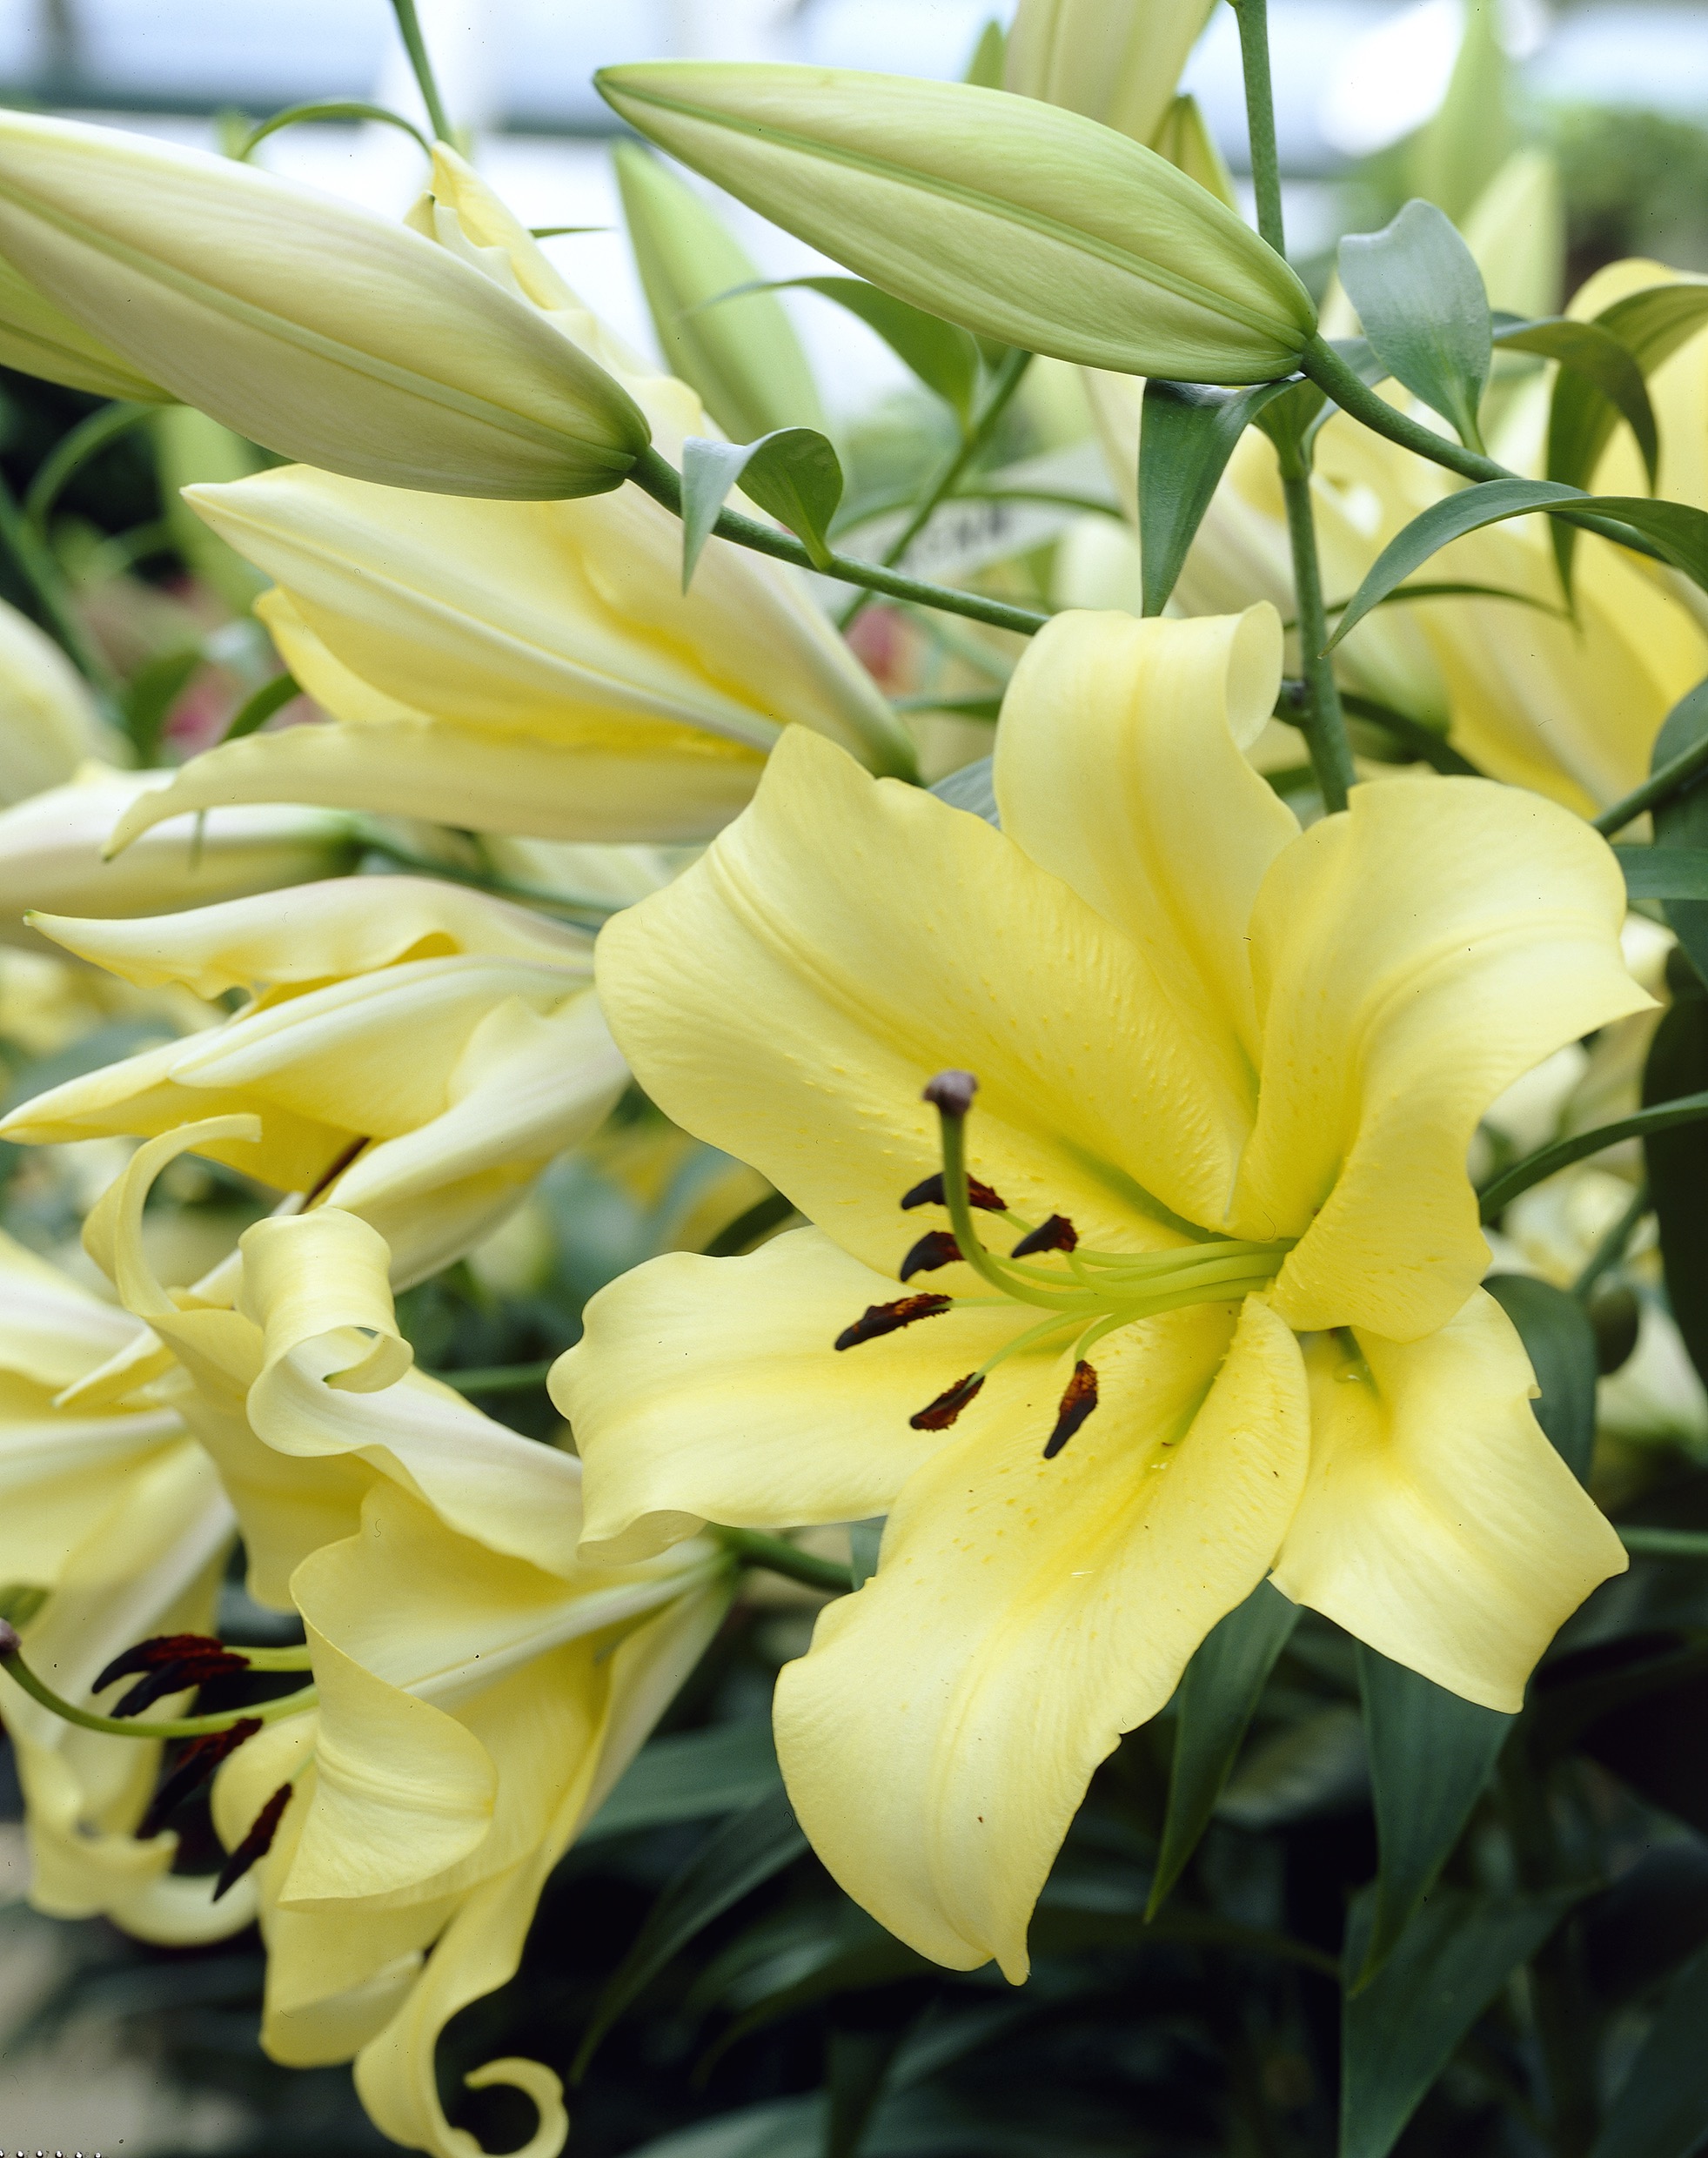 yelloween fragrant OT lily